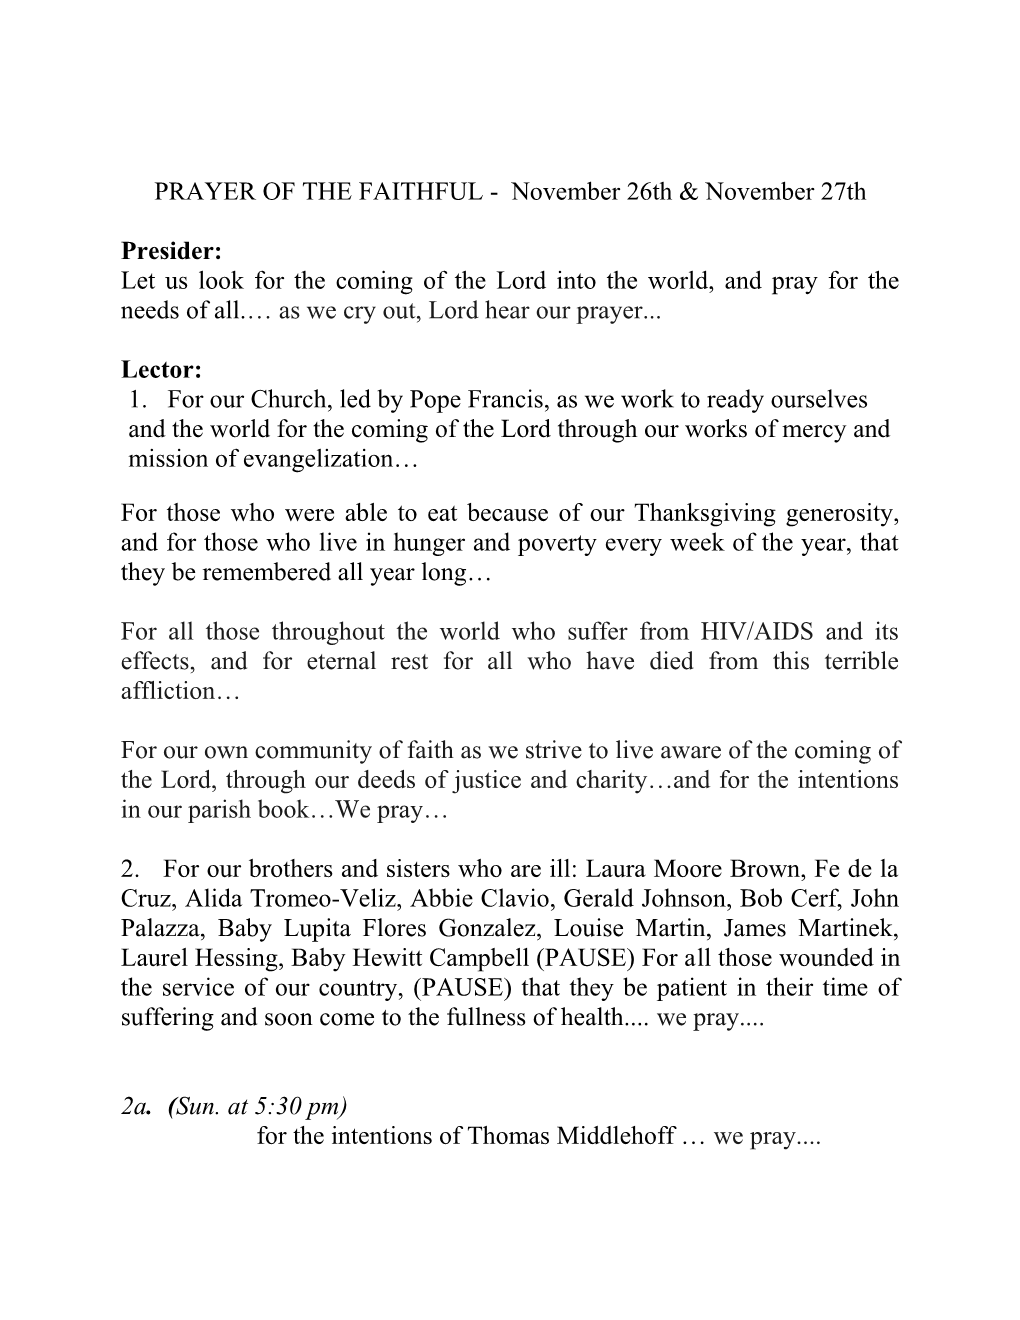 PRAYER of the FAITHFUL - November26thnovember 27Th